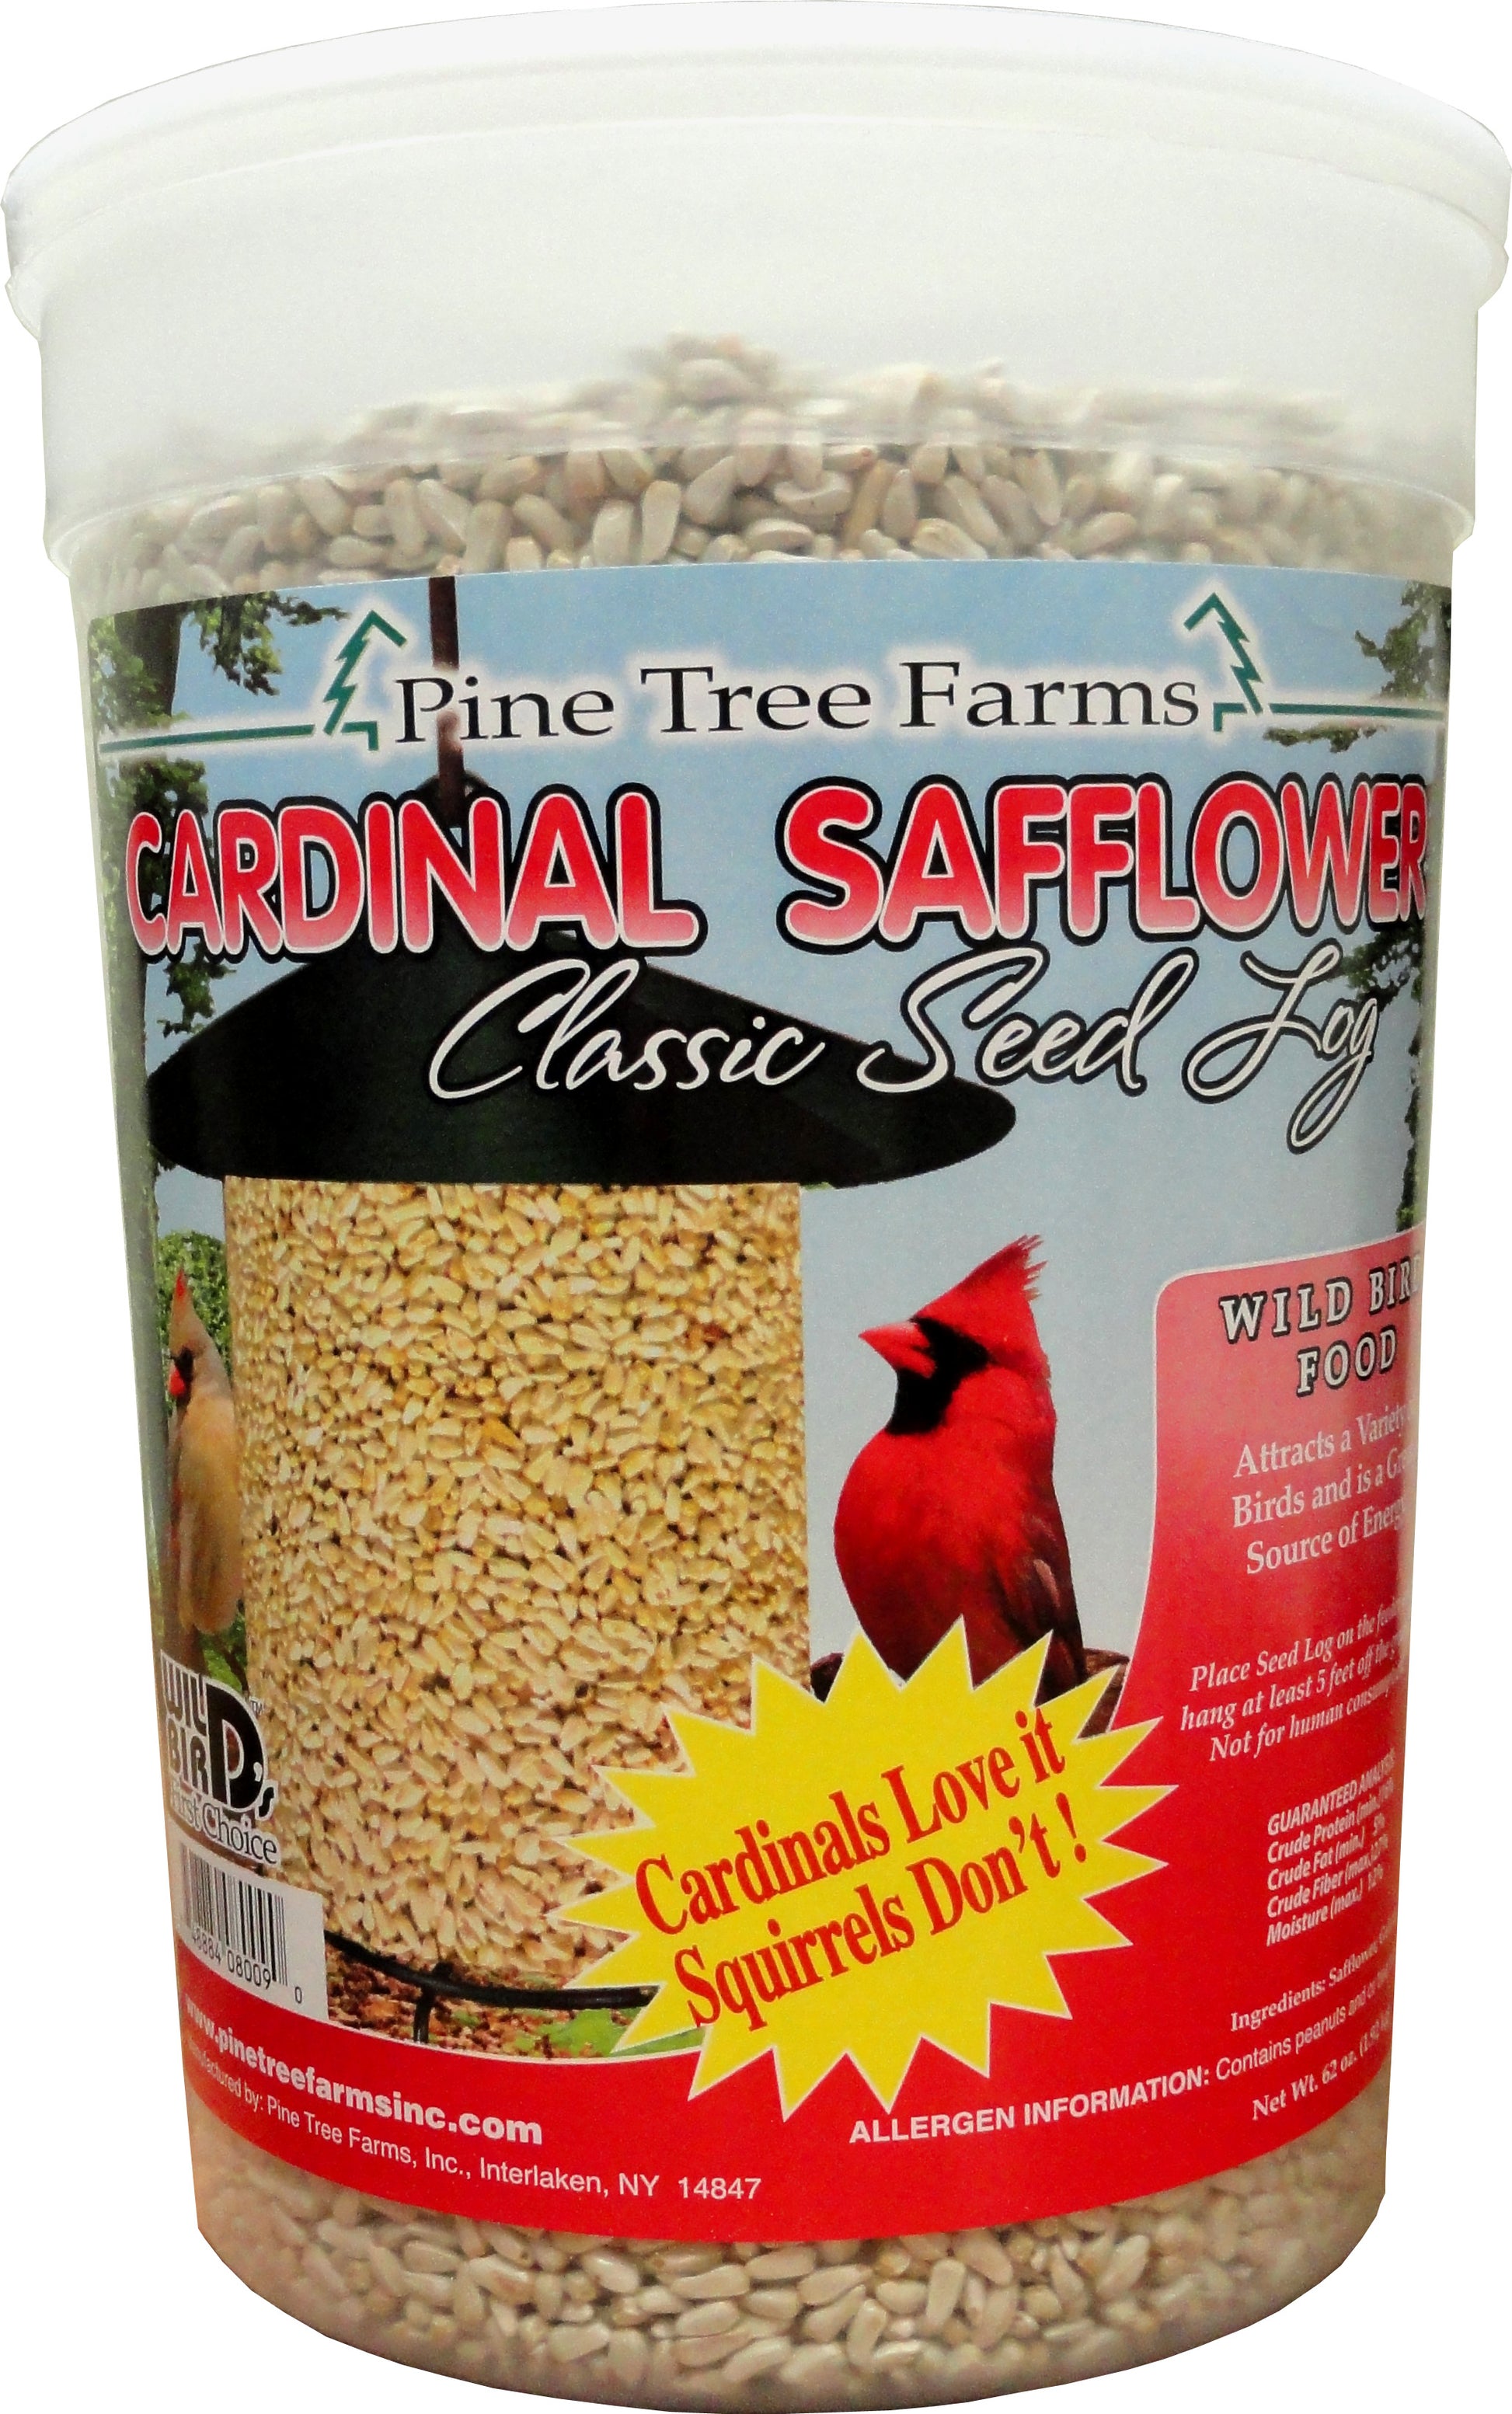 pine-tree-farms-cardinal-safflower-classic-seed-log-62-oz